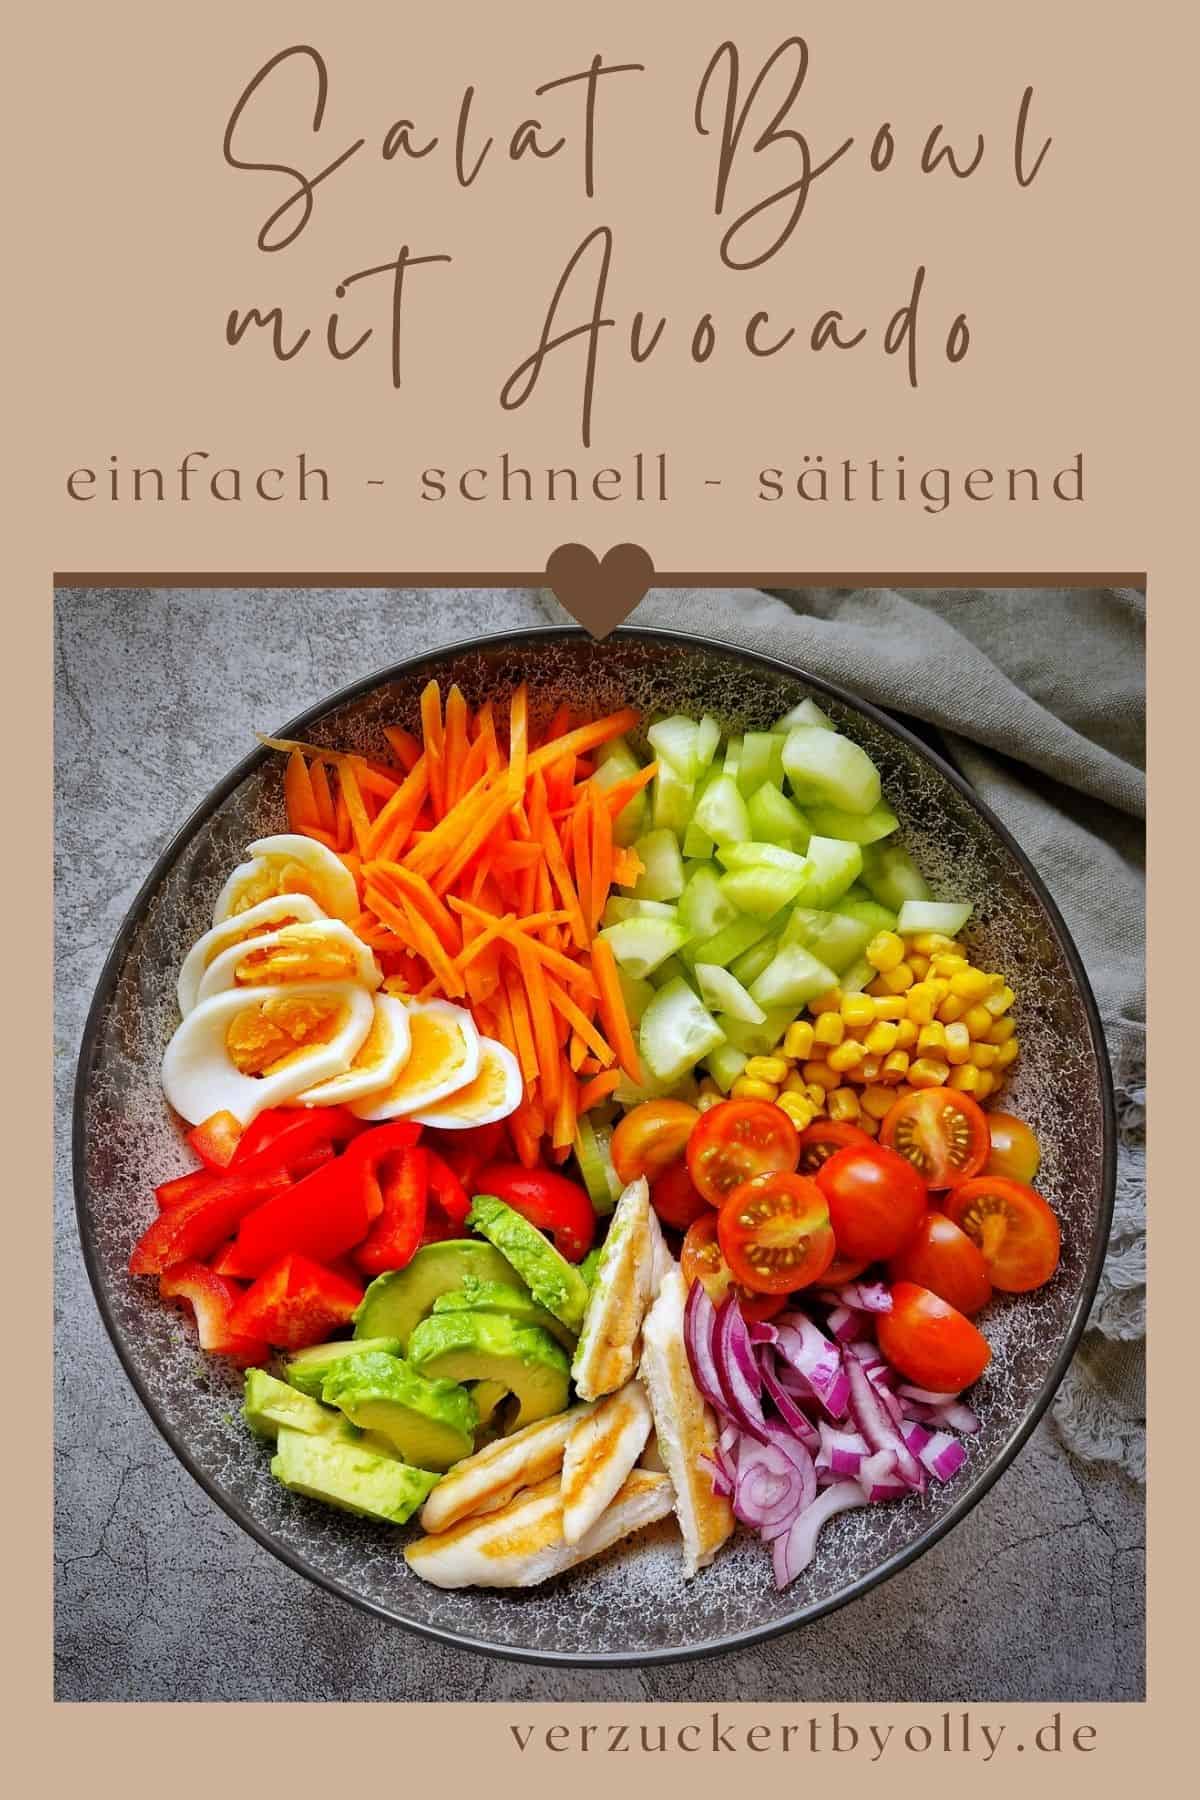 Pin zu Pinterest: Salat Bowl mit Avocado 